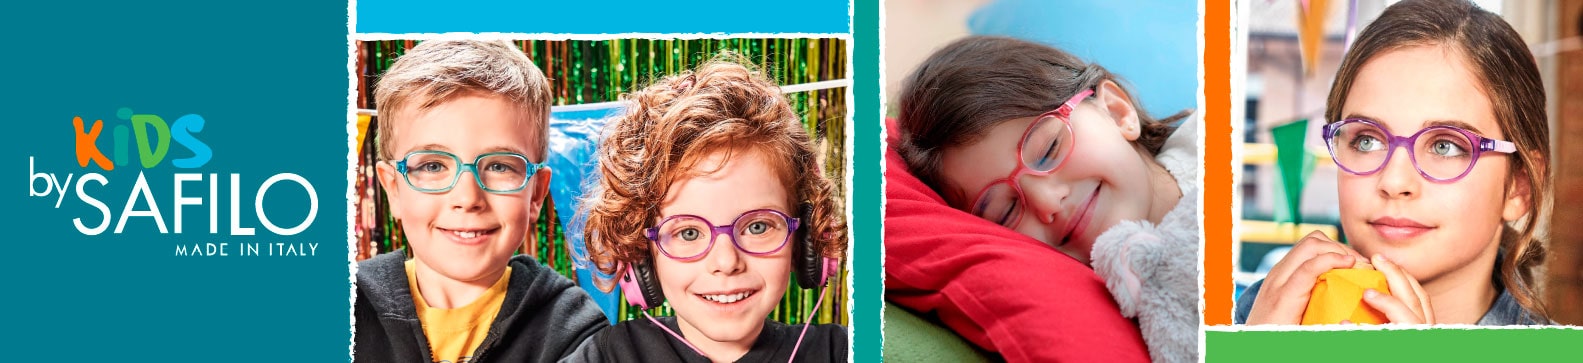 Kids By Safilo Glasses Eyeglasses at Optiwow